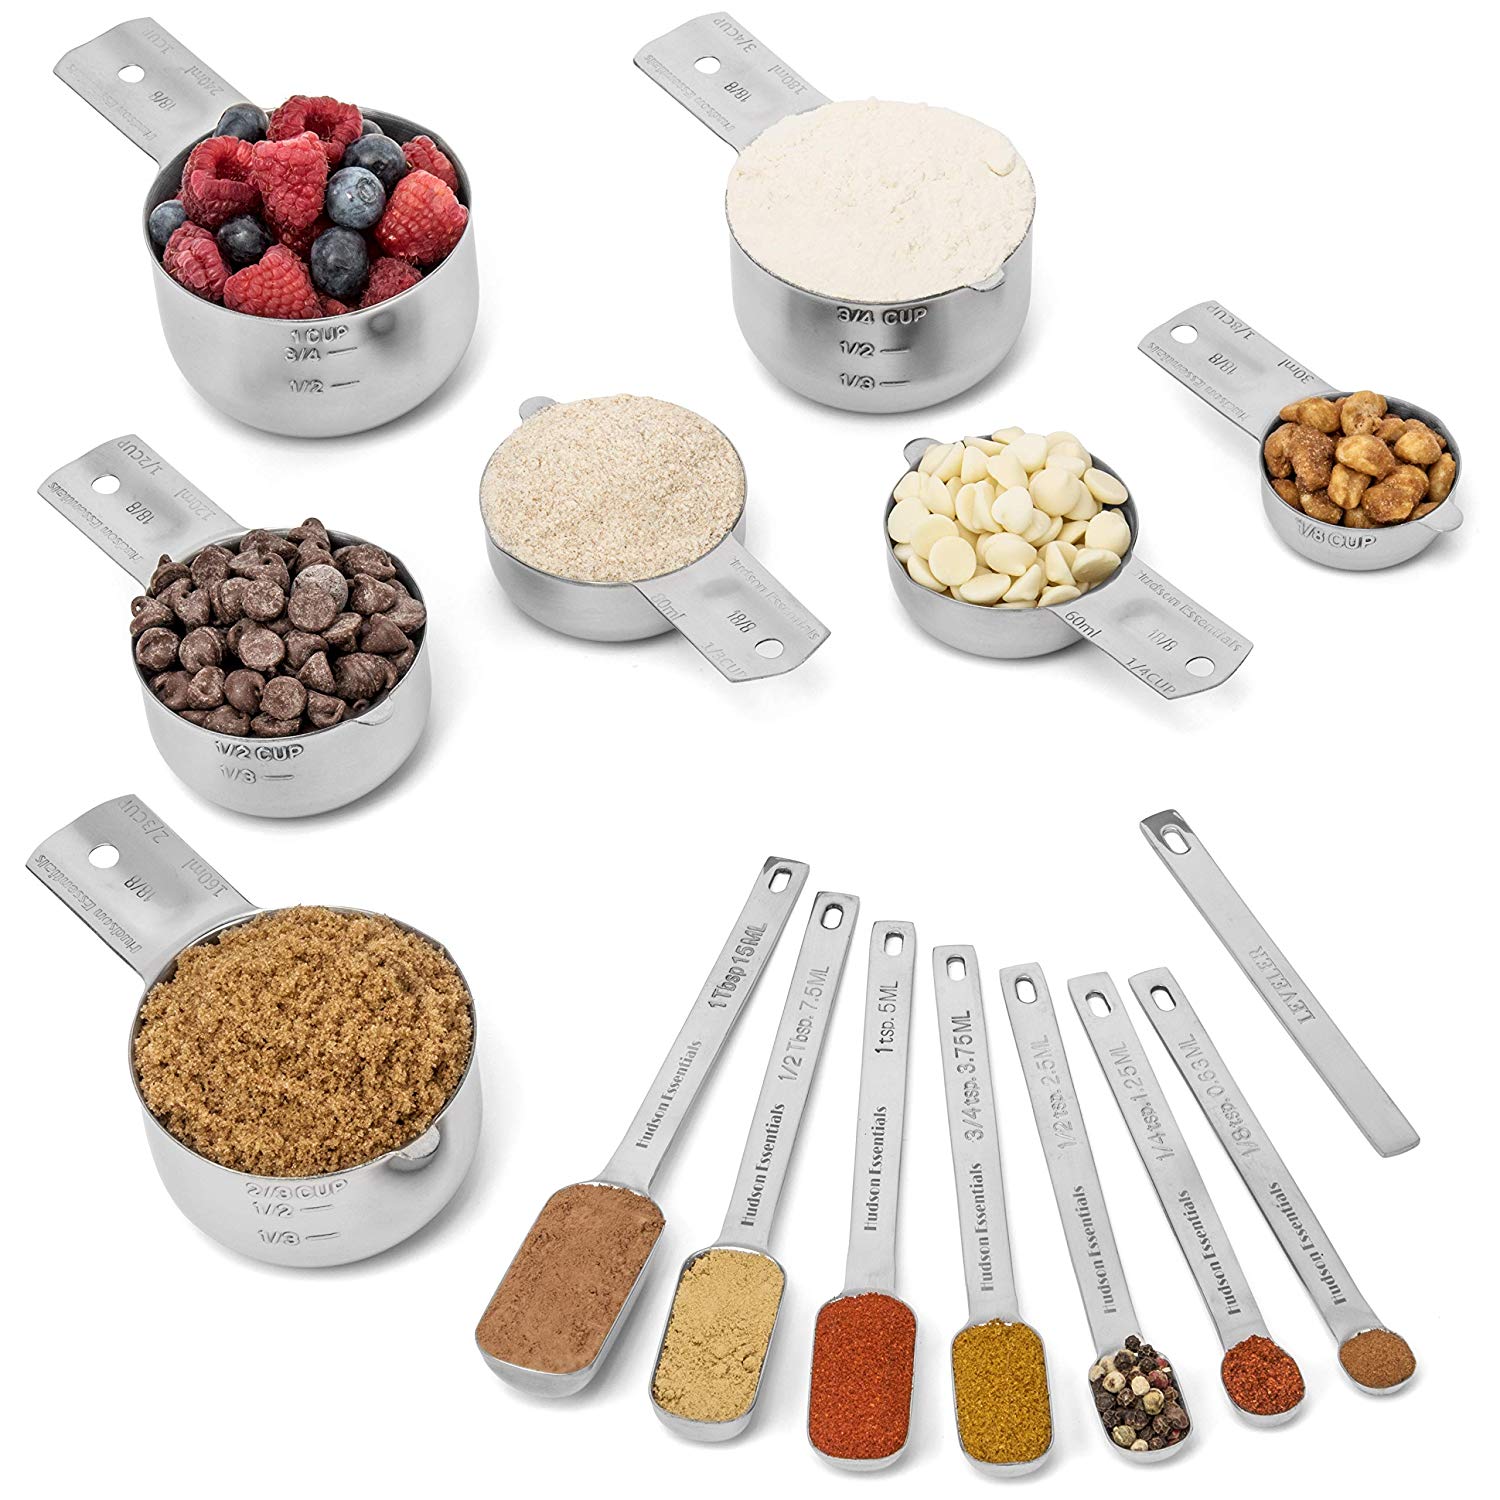 Hudson Essentials Stainless Steel Measuring Cups Set (6 Piece Set)